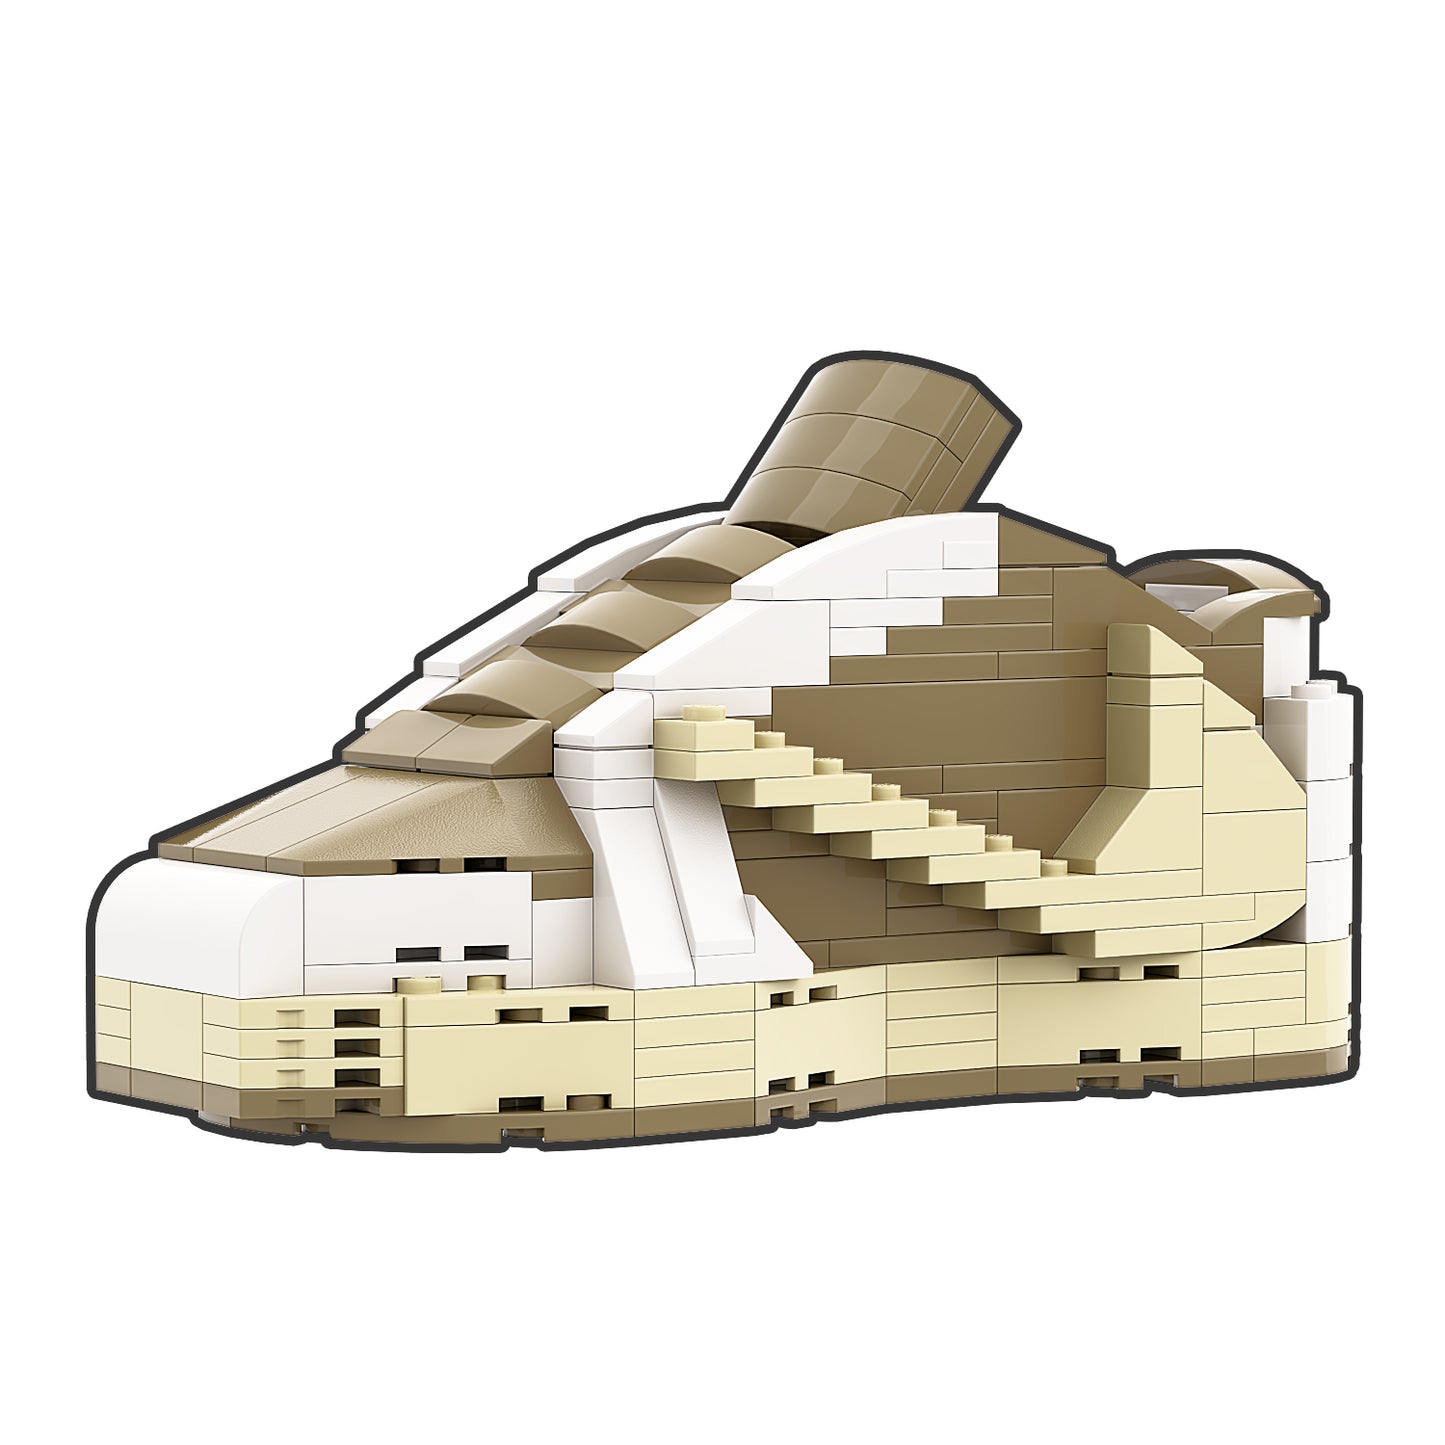 REGULAR "AJ1 Travis Scott low Reverse Mocha" Sneaker Bricks with Mini Figure